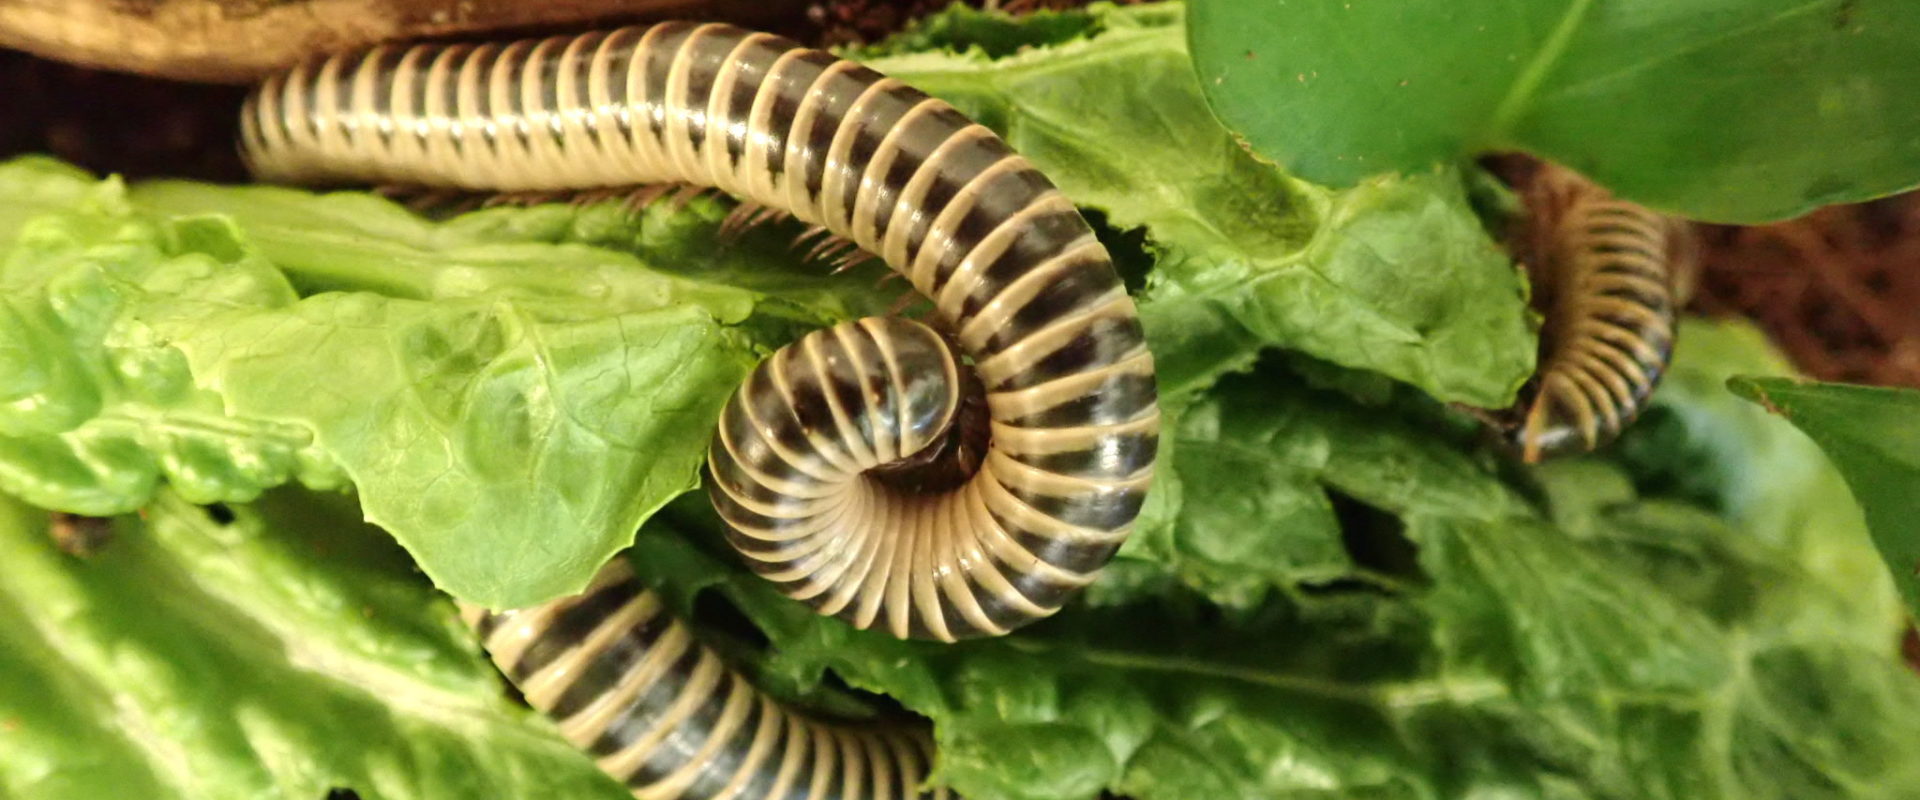 Florida Ivory Millipedes feeding on lettuce